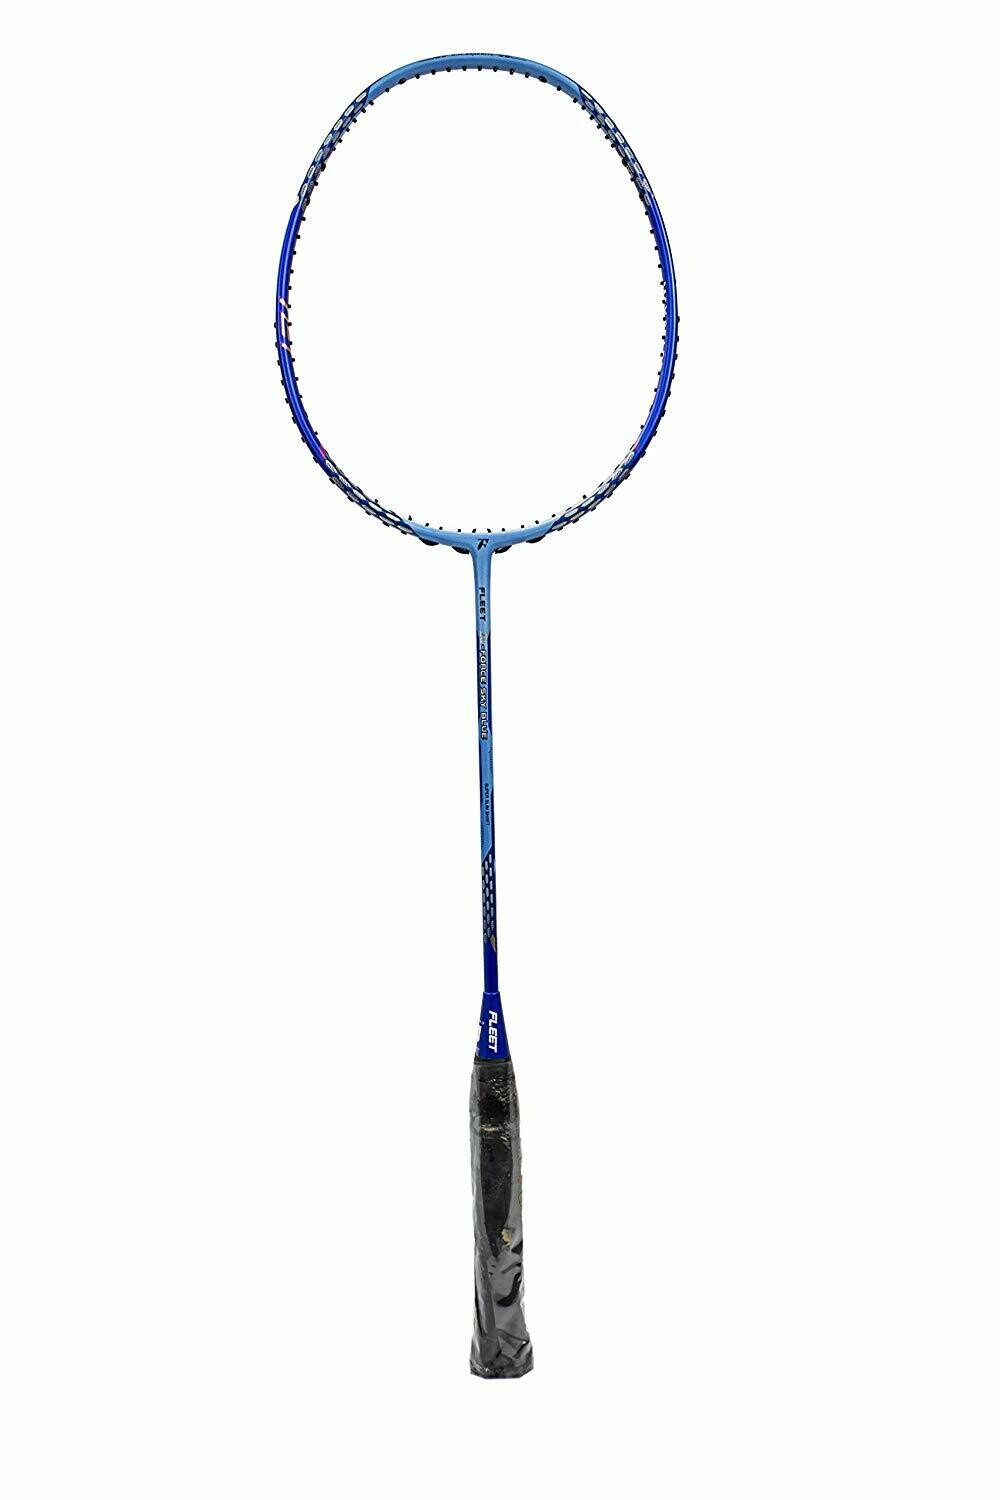 Fleet X-Force Sky Badminton Racket